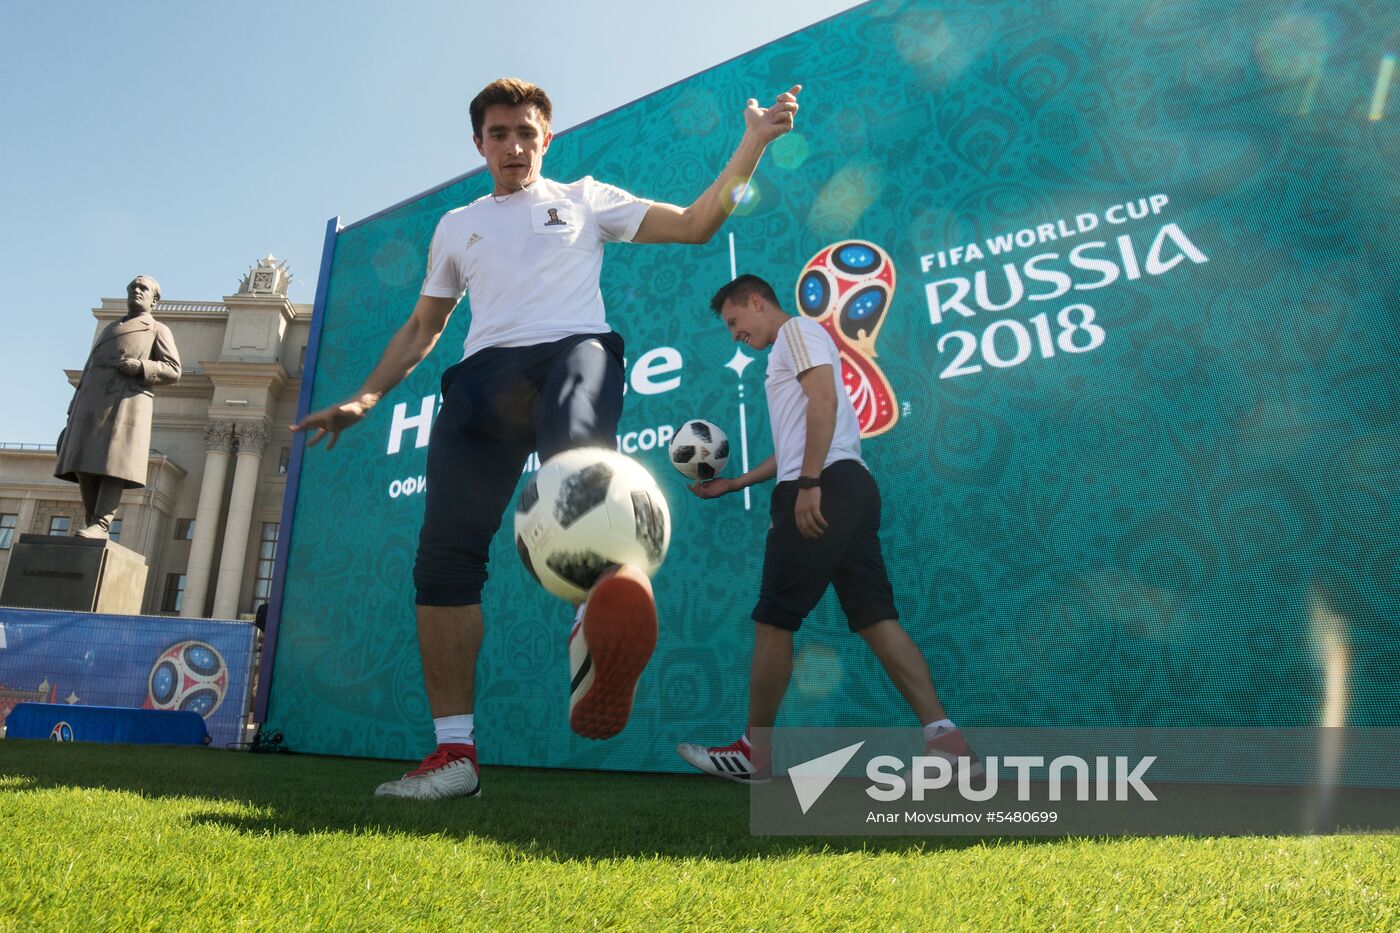 2018 FIFA World Cup football park in Samara